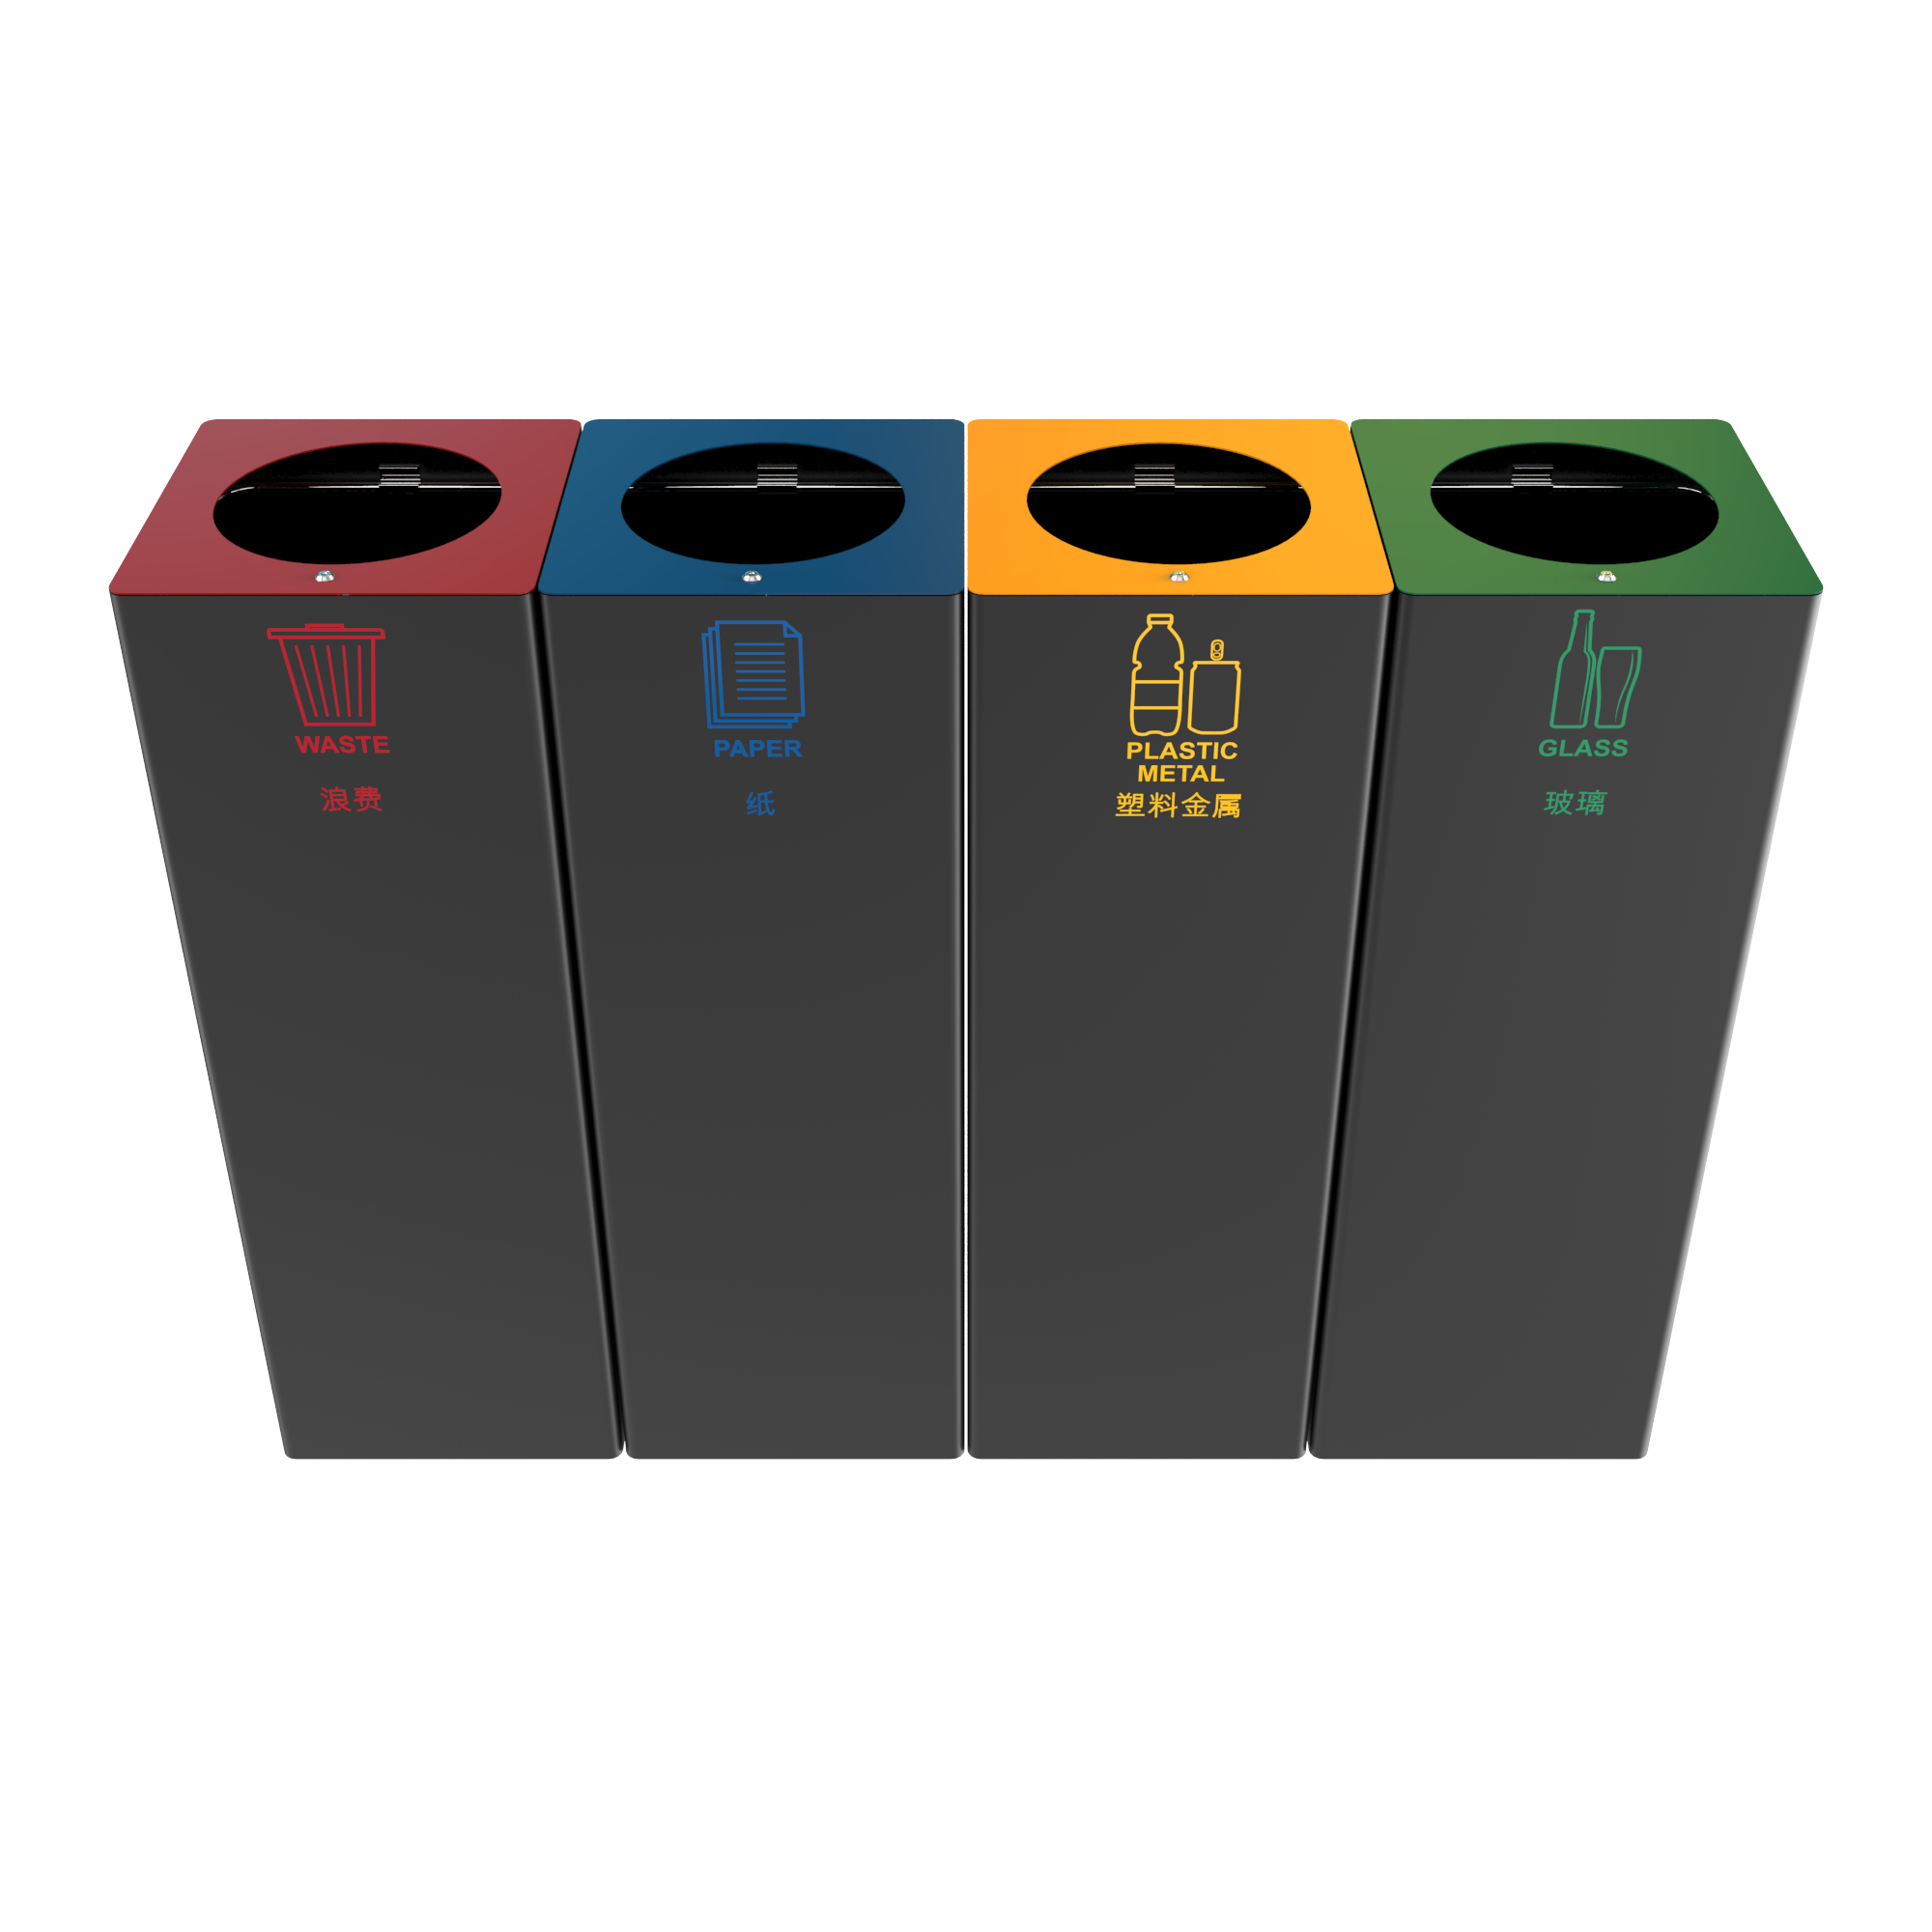 SALLIERE PC modern recycle bins made of sheet metal - Binsignia®